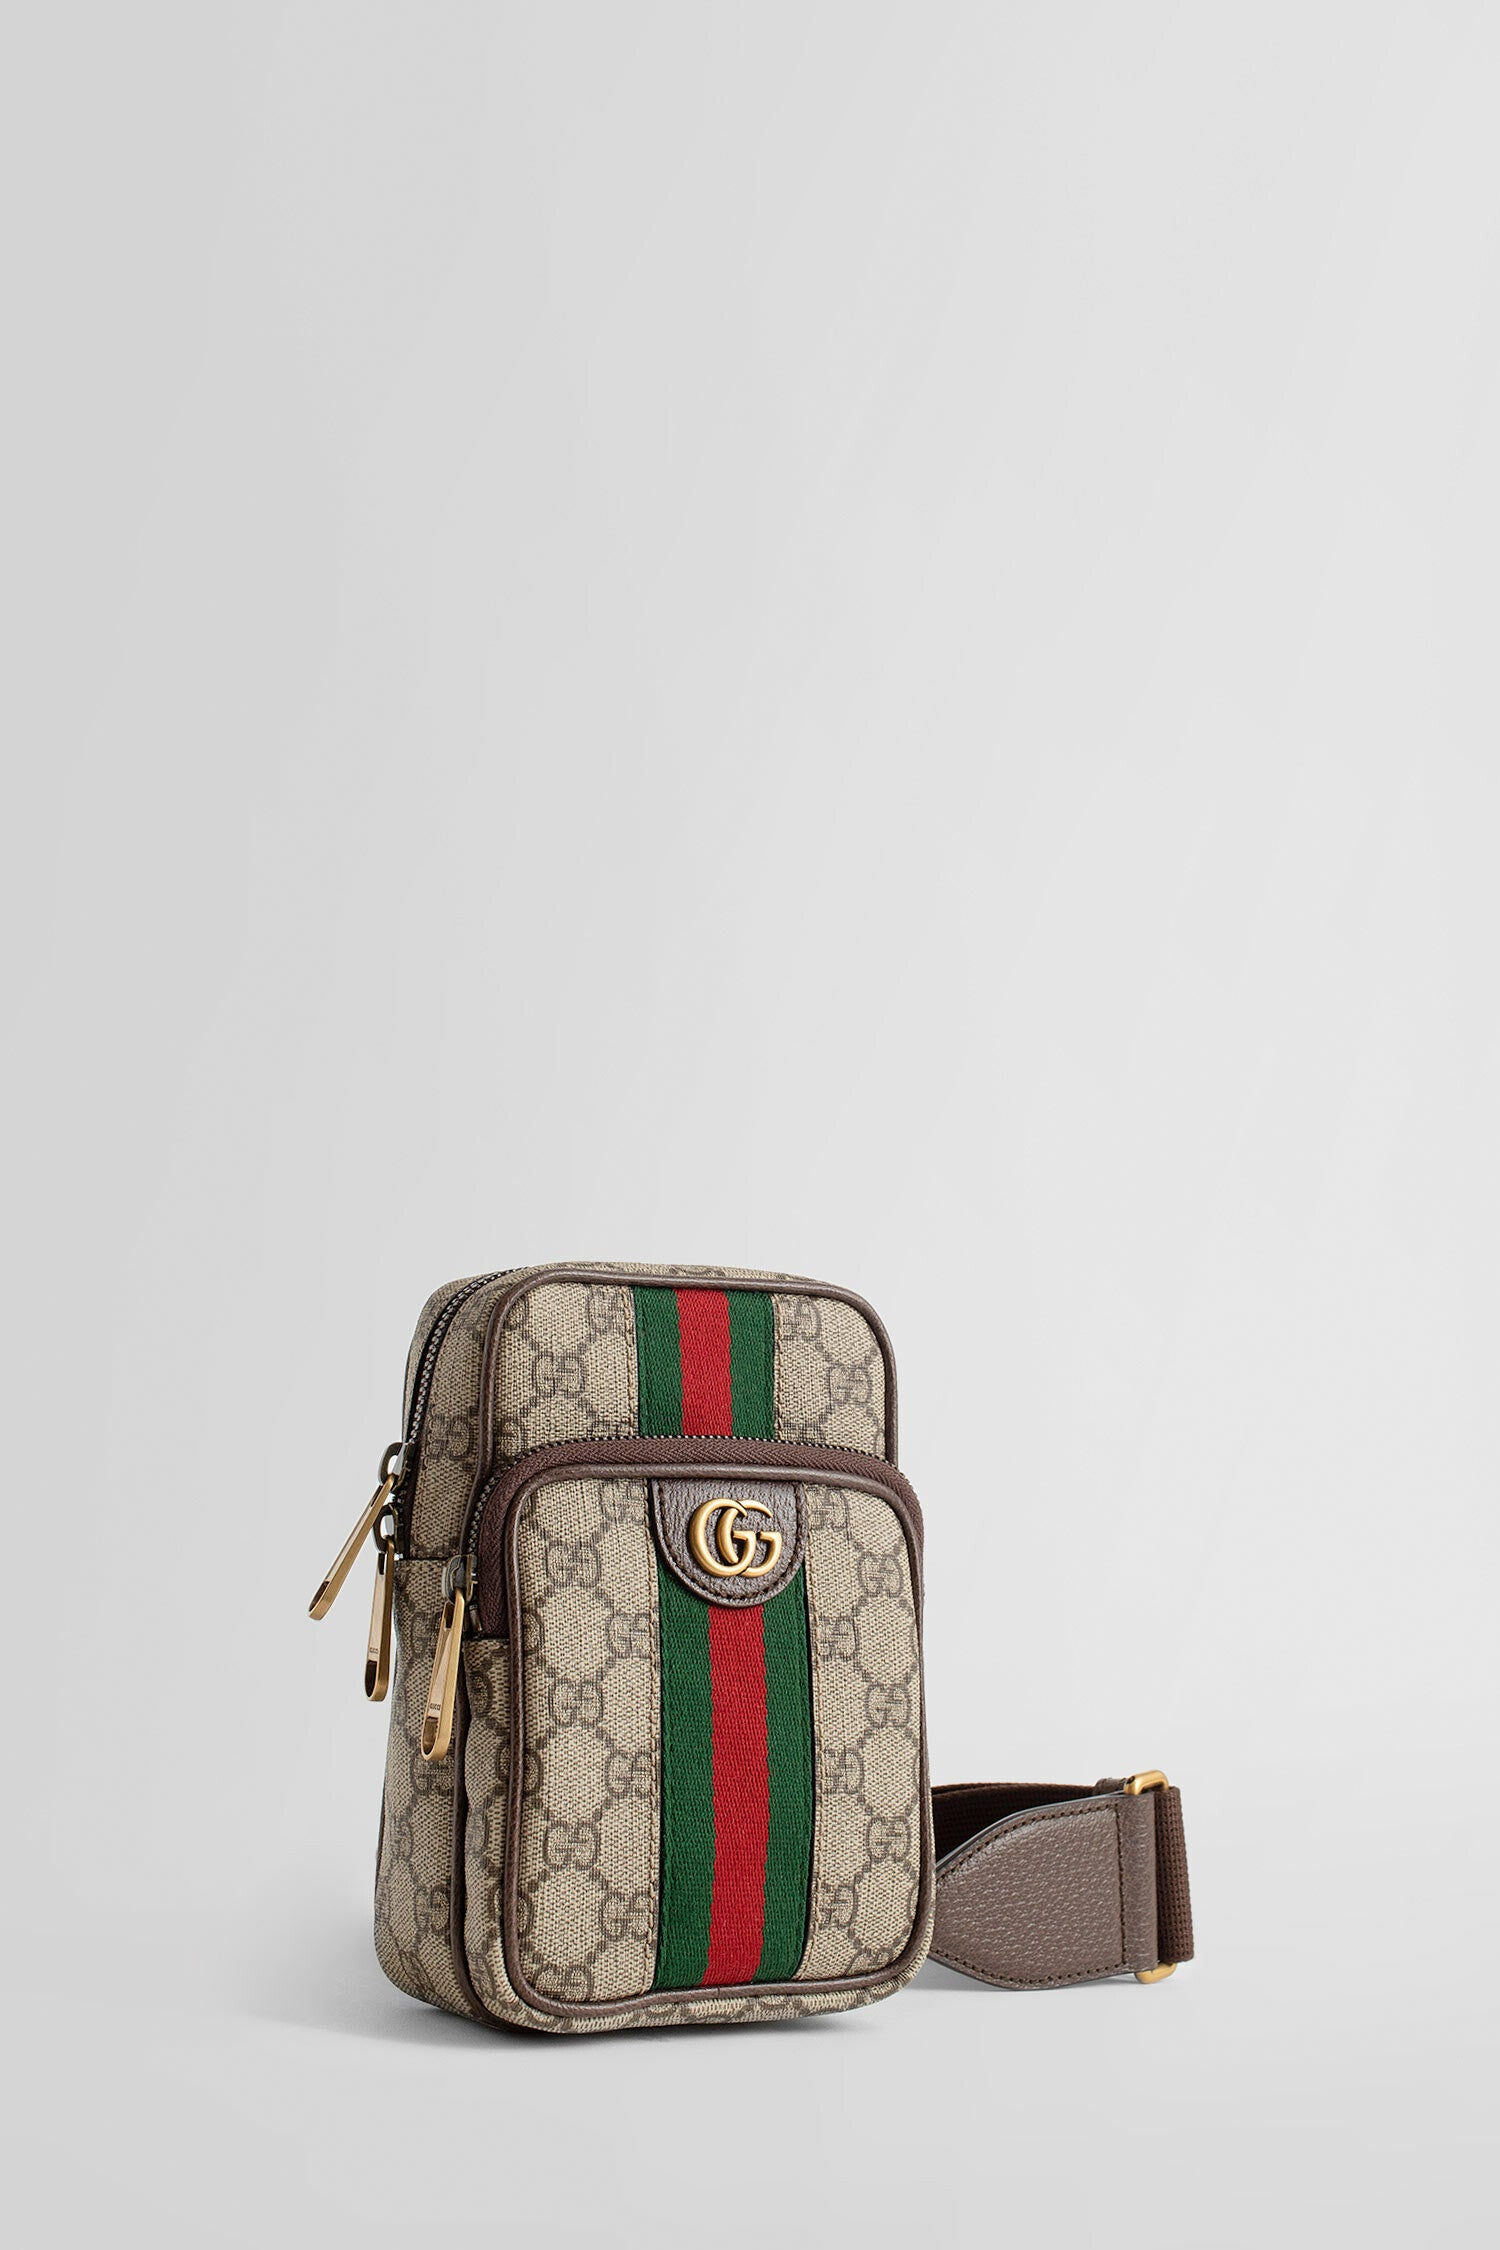 Gucci Messenger Bags  Man bag, Gucci messenger bags, Bags